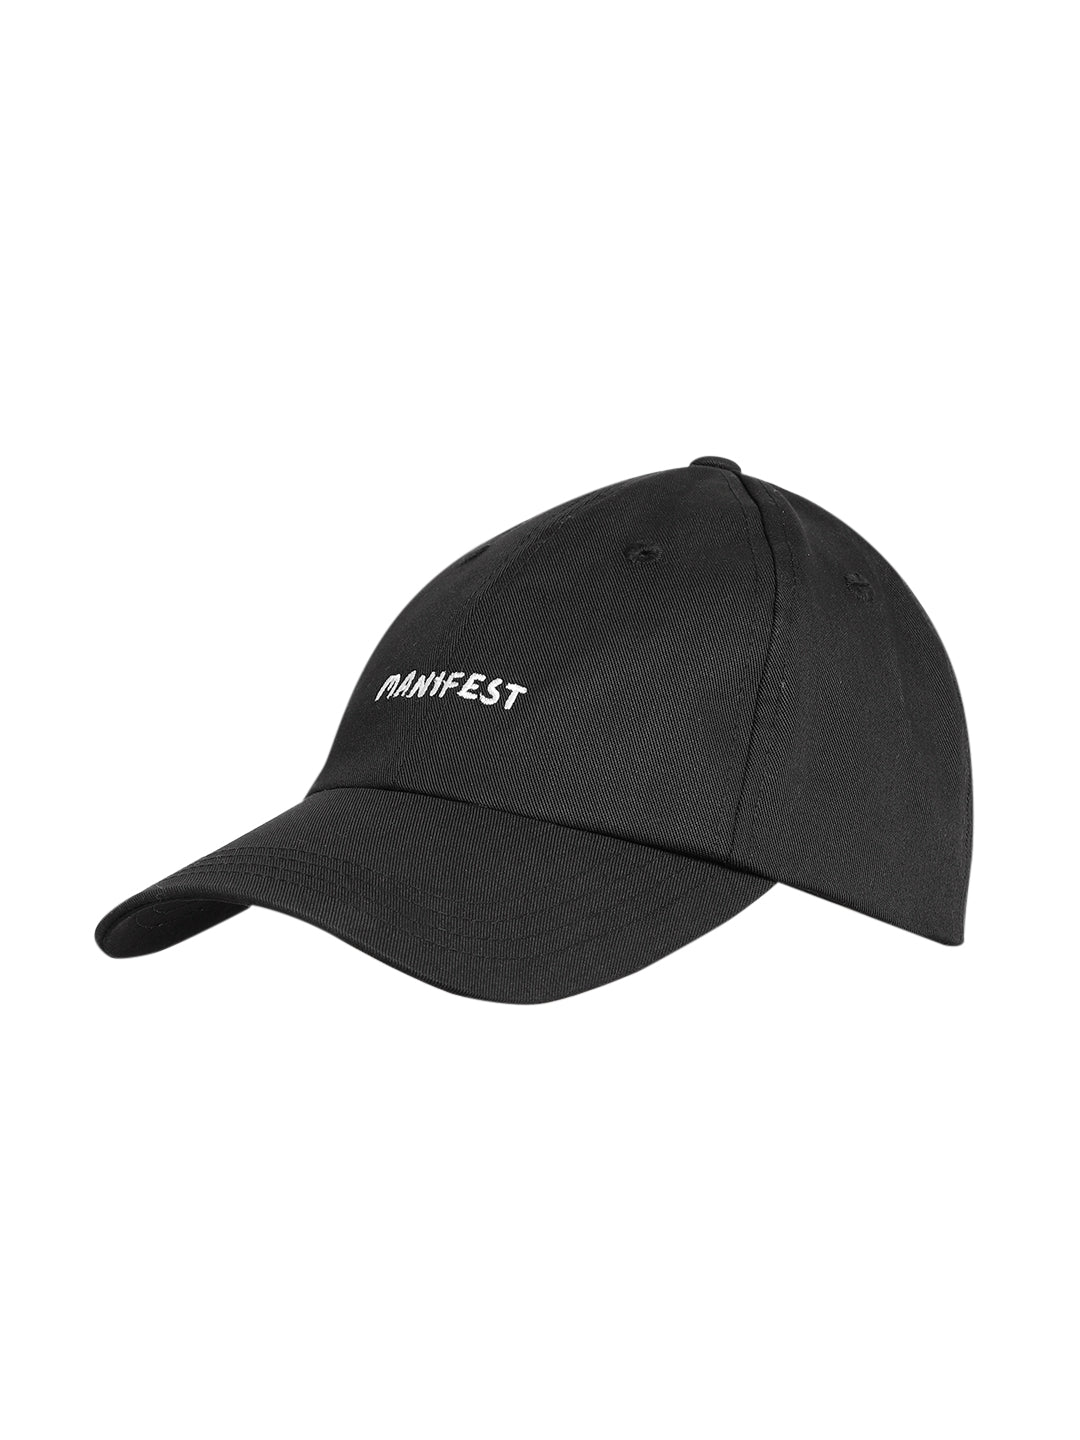 Blueberry black Manifest baseball cap